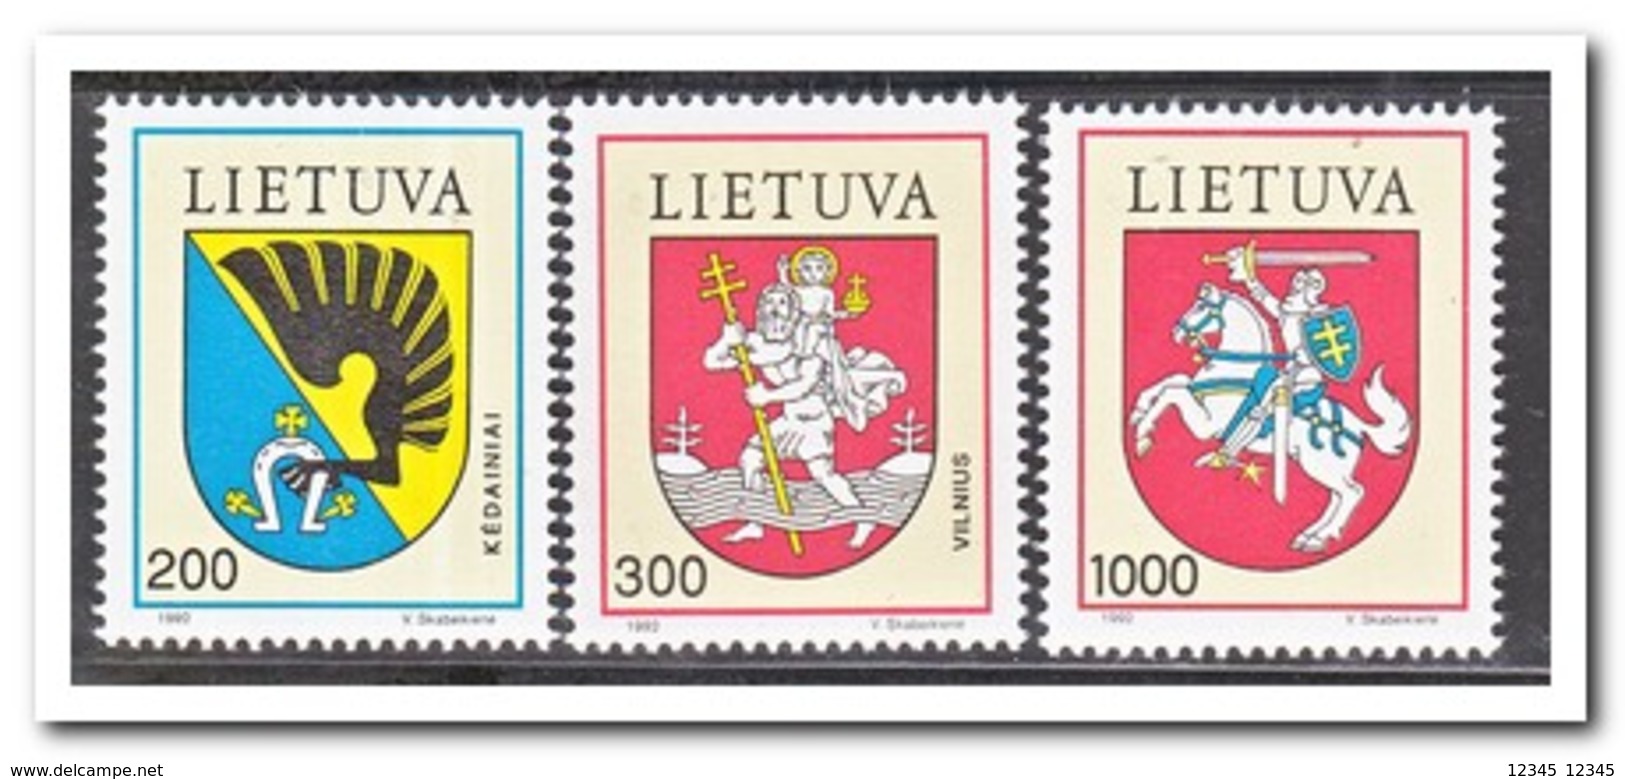 Litouwen 1992, Postfris MNH, City Coat Of Arms - Litouwen